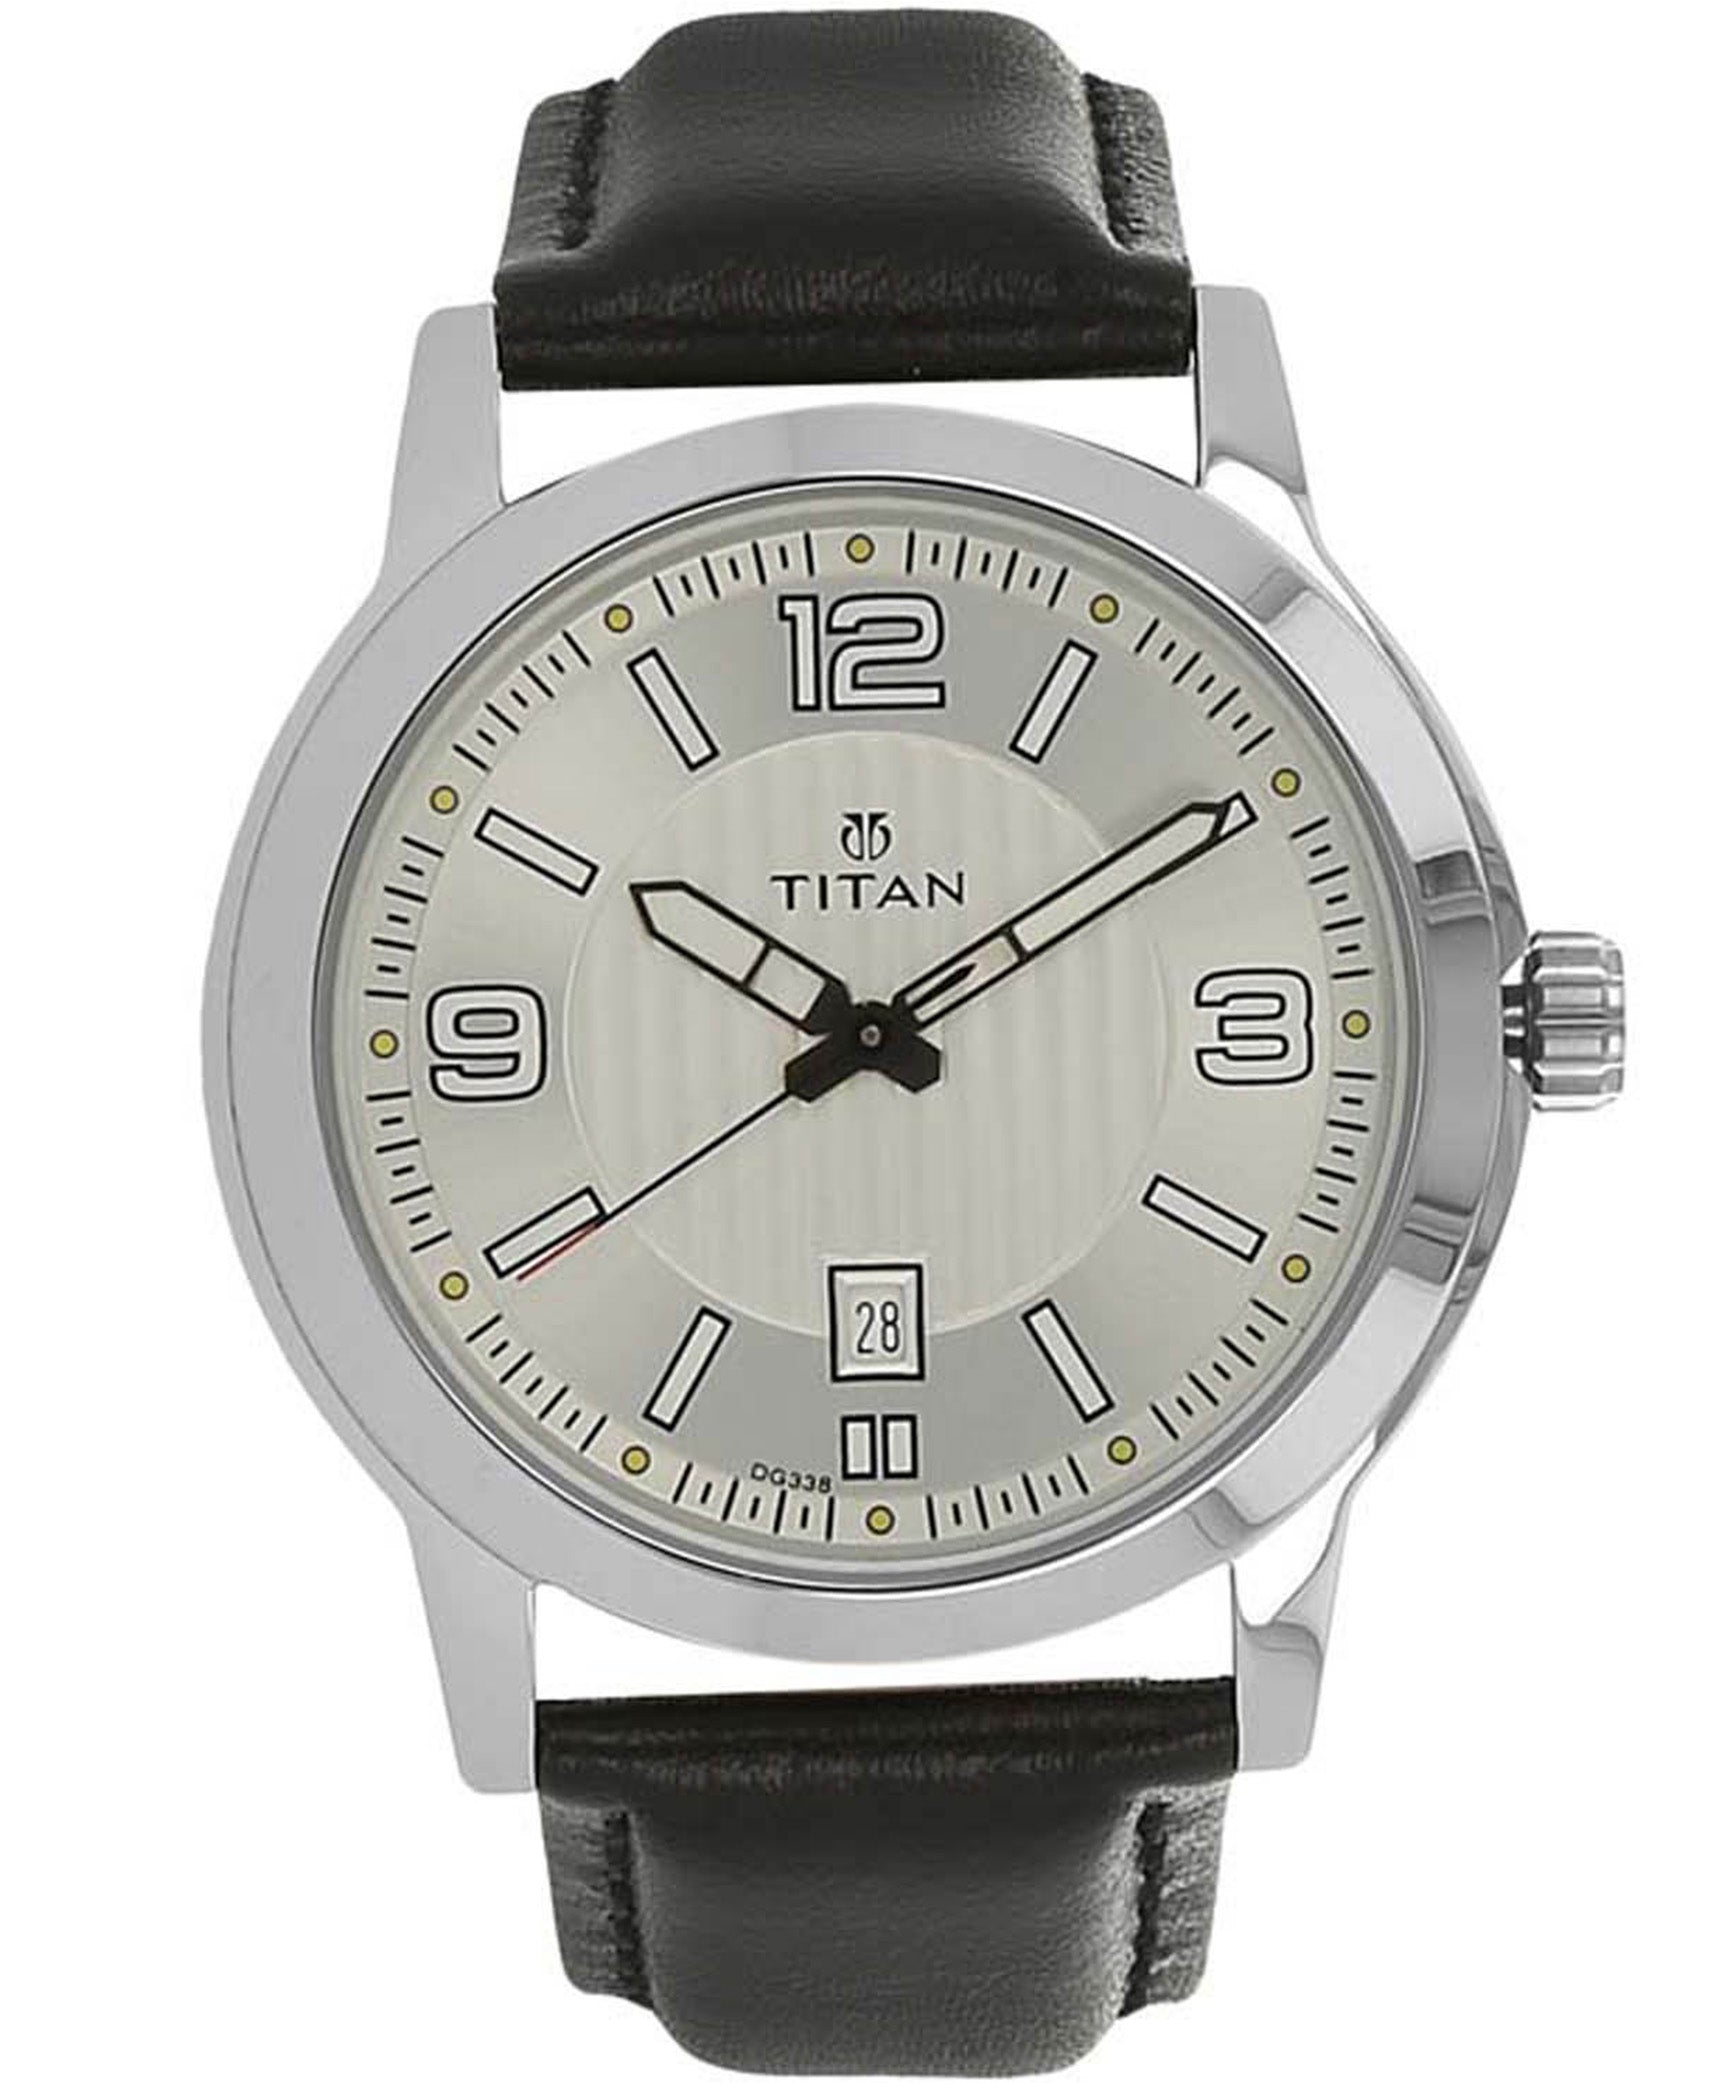 Titan Men's Watch Silver Dial Black Leather Strap Watch, 1730SL01